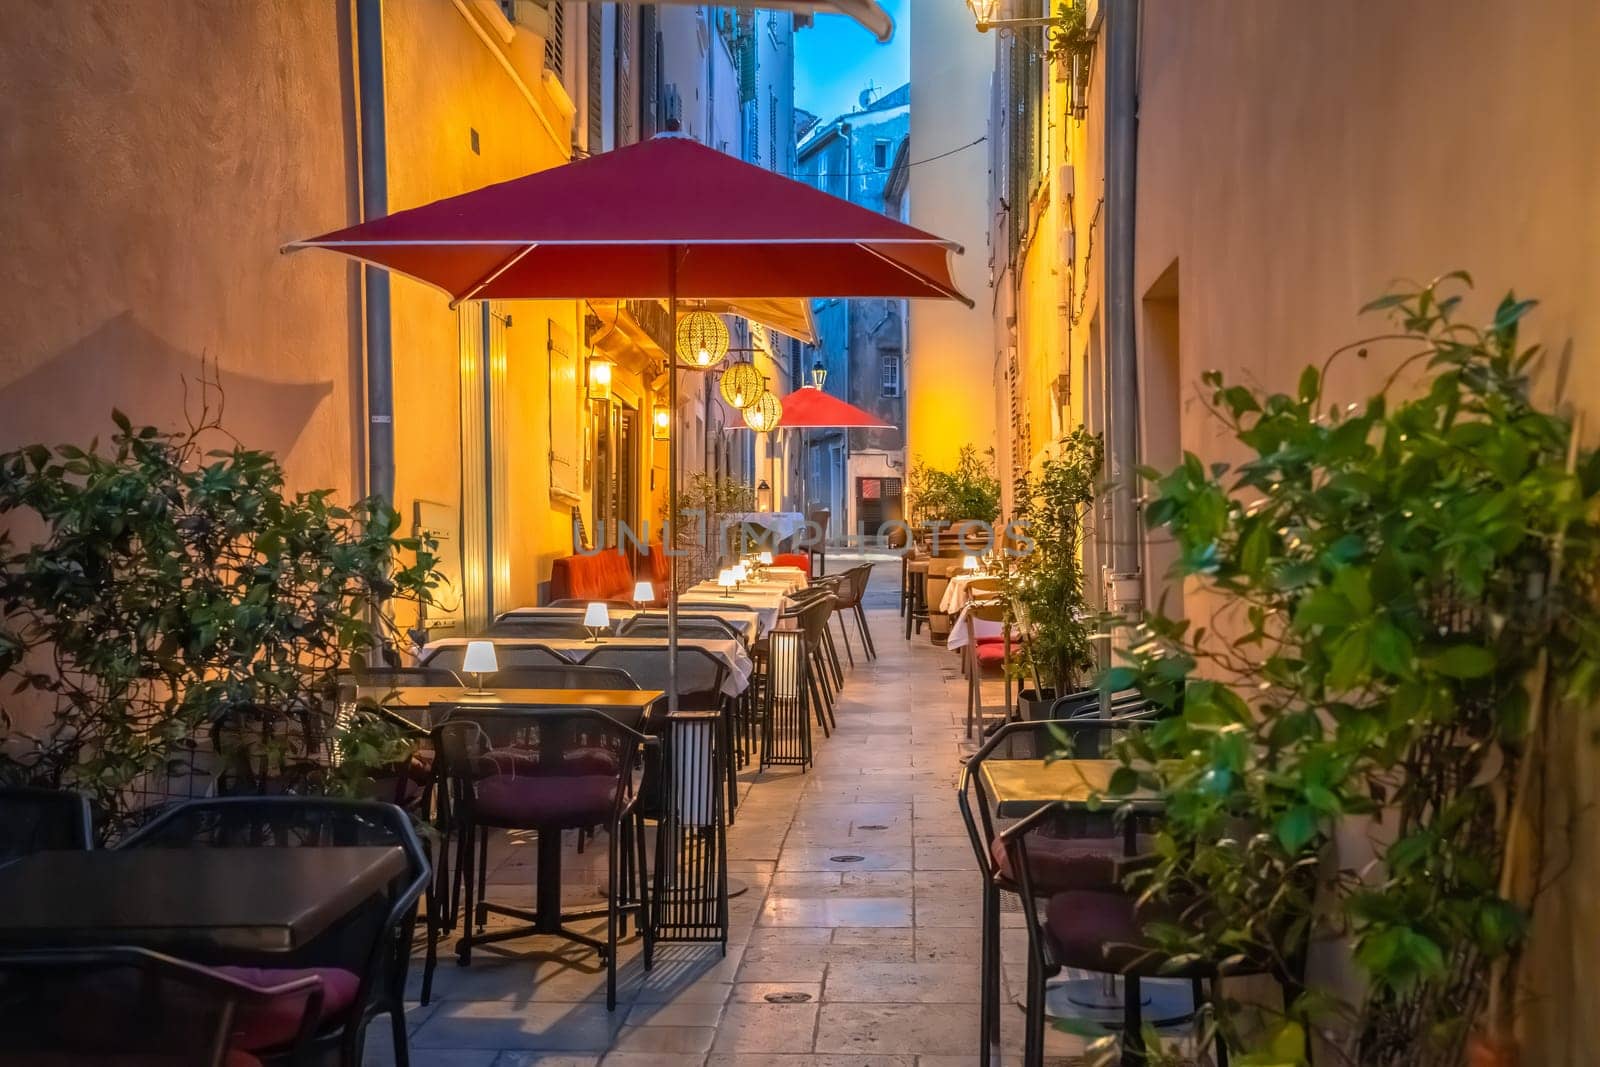 Saint Tropez stone alley with restaurants evening view, luxuty travel destination by xbrchx